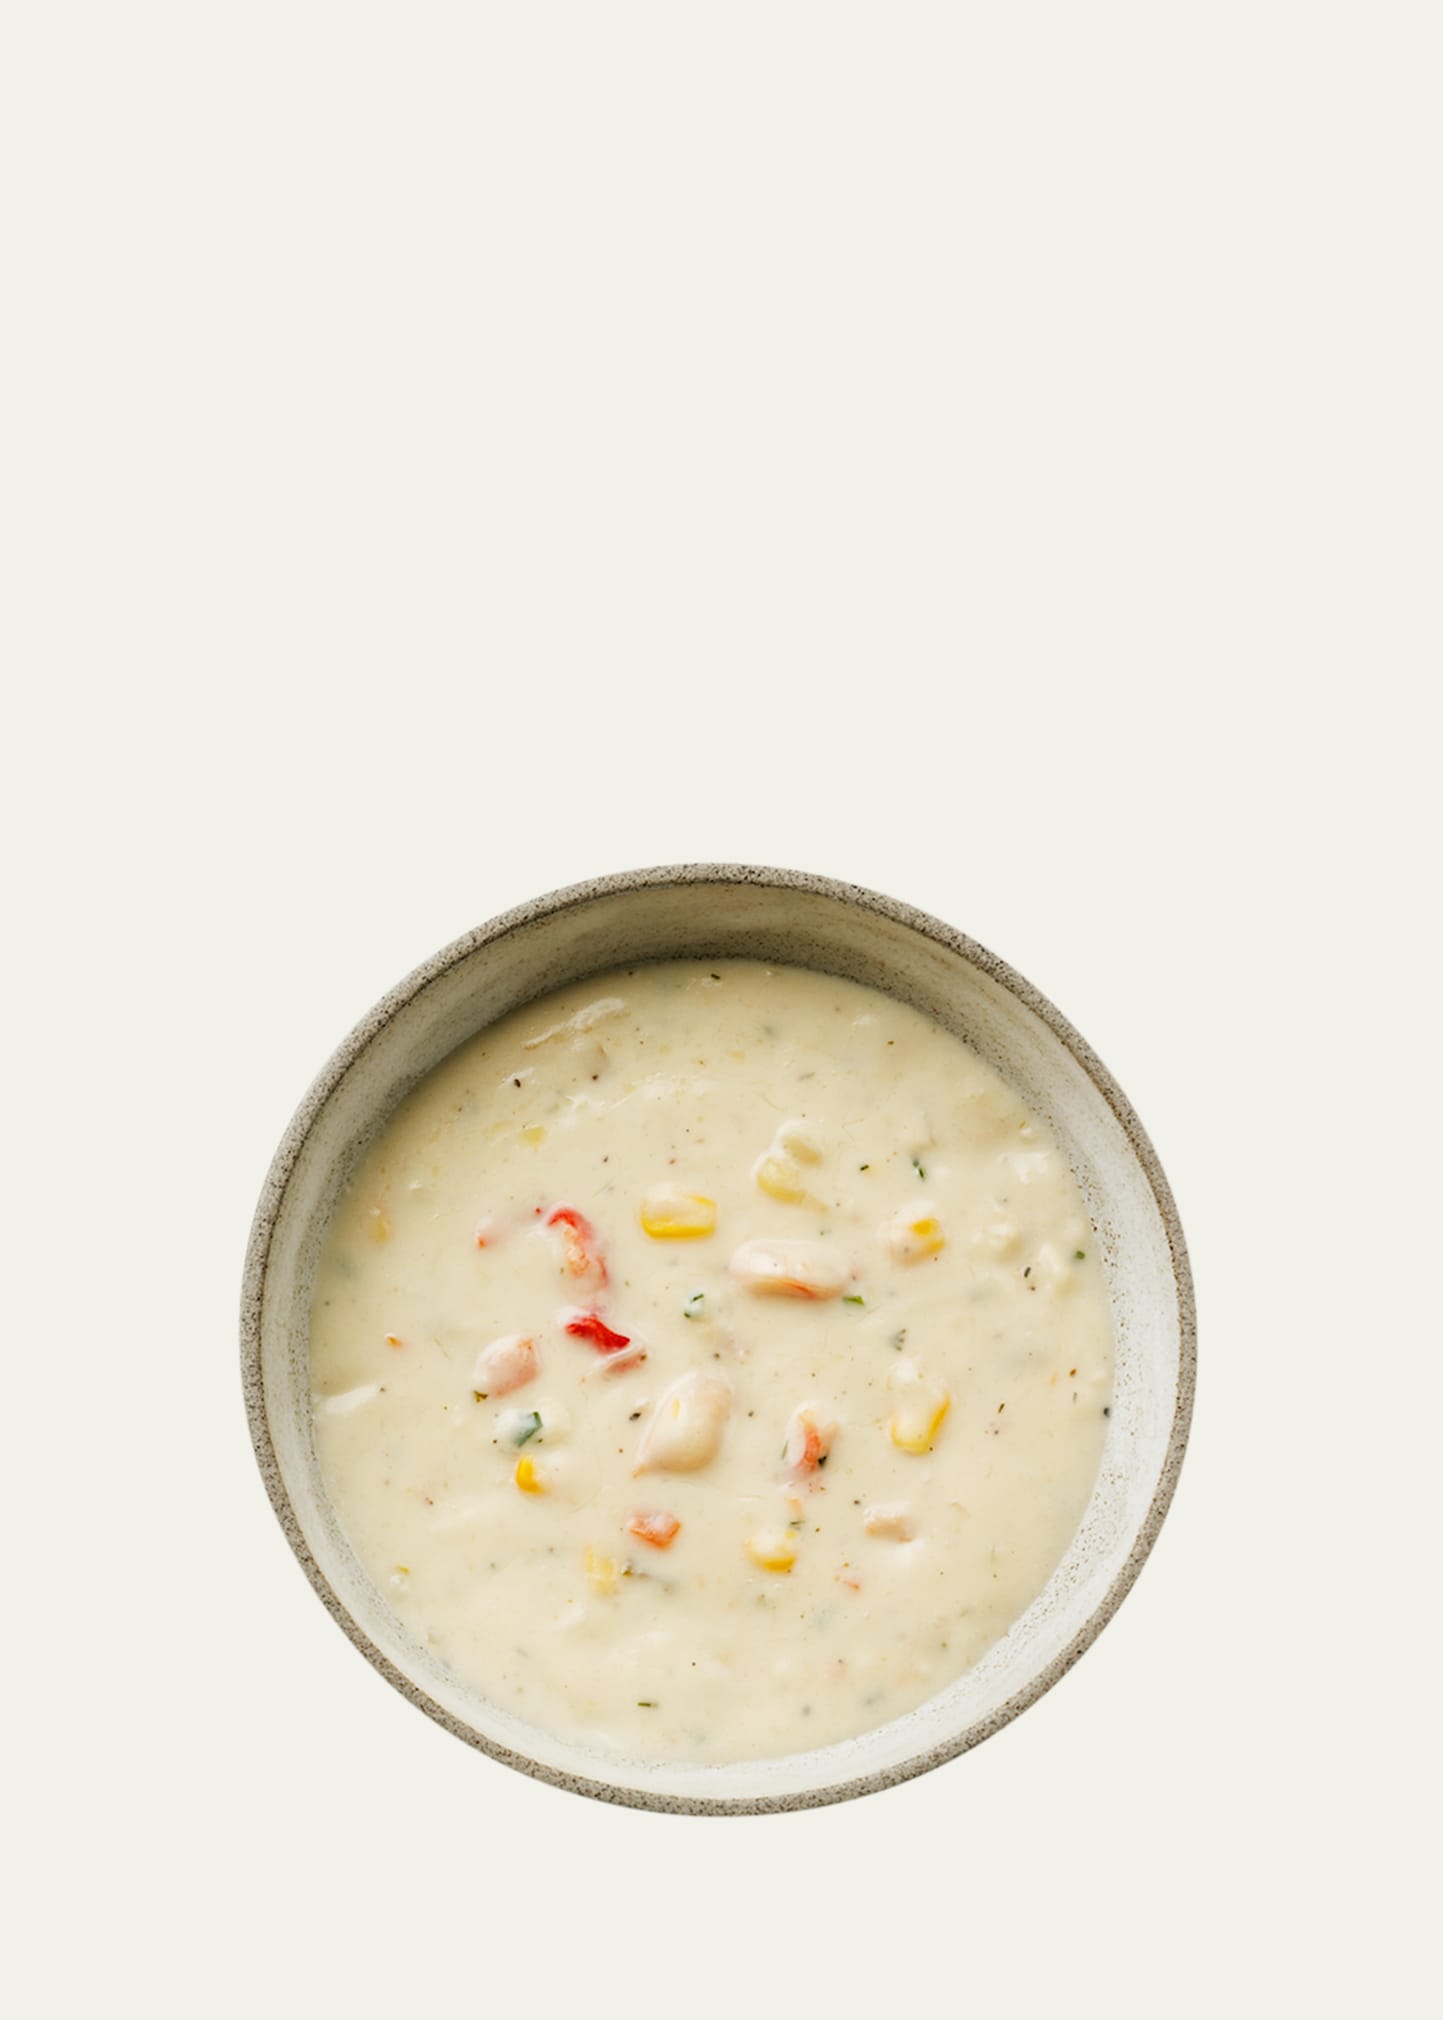 Southern Shrimp, Crab, & Corn Bisque - Serves 4-6